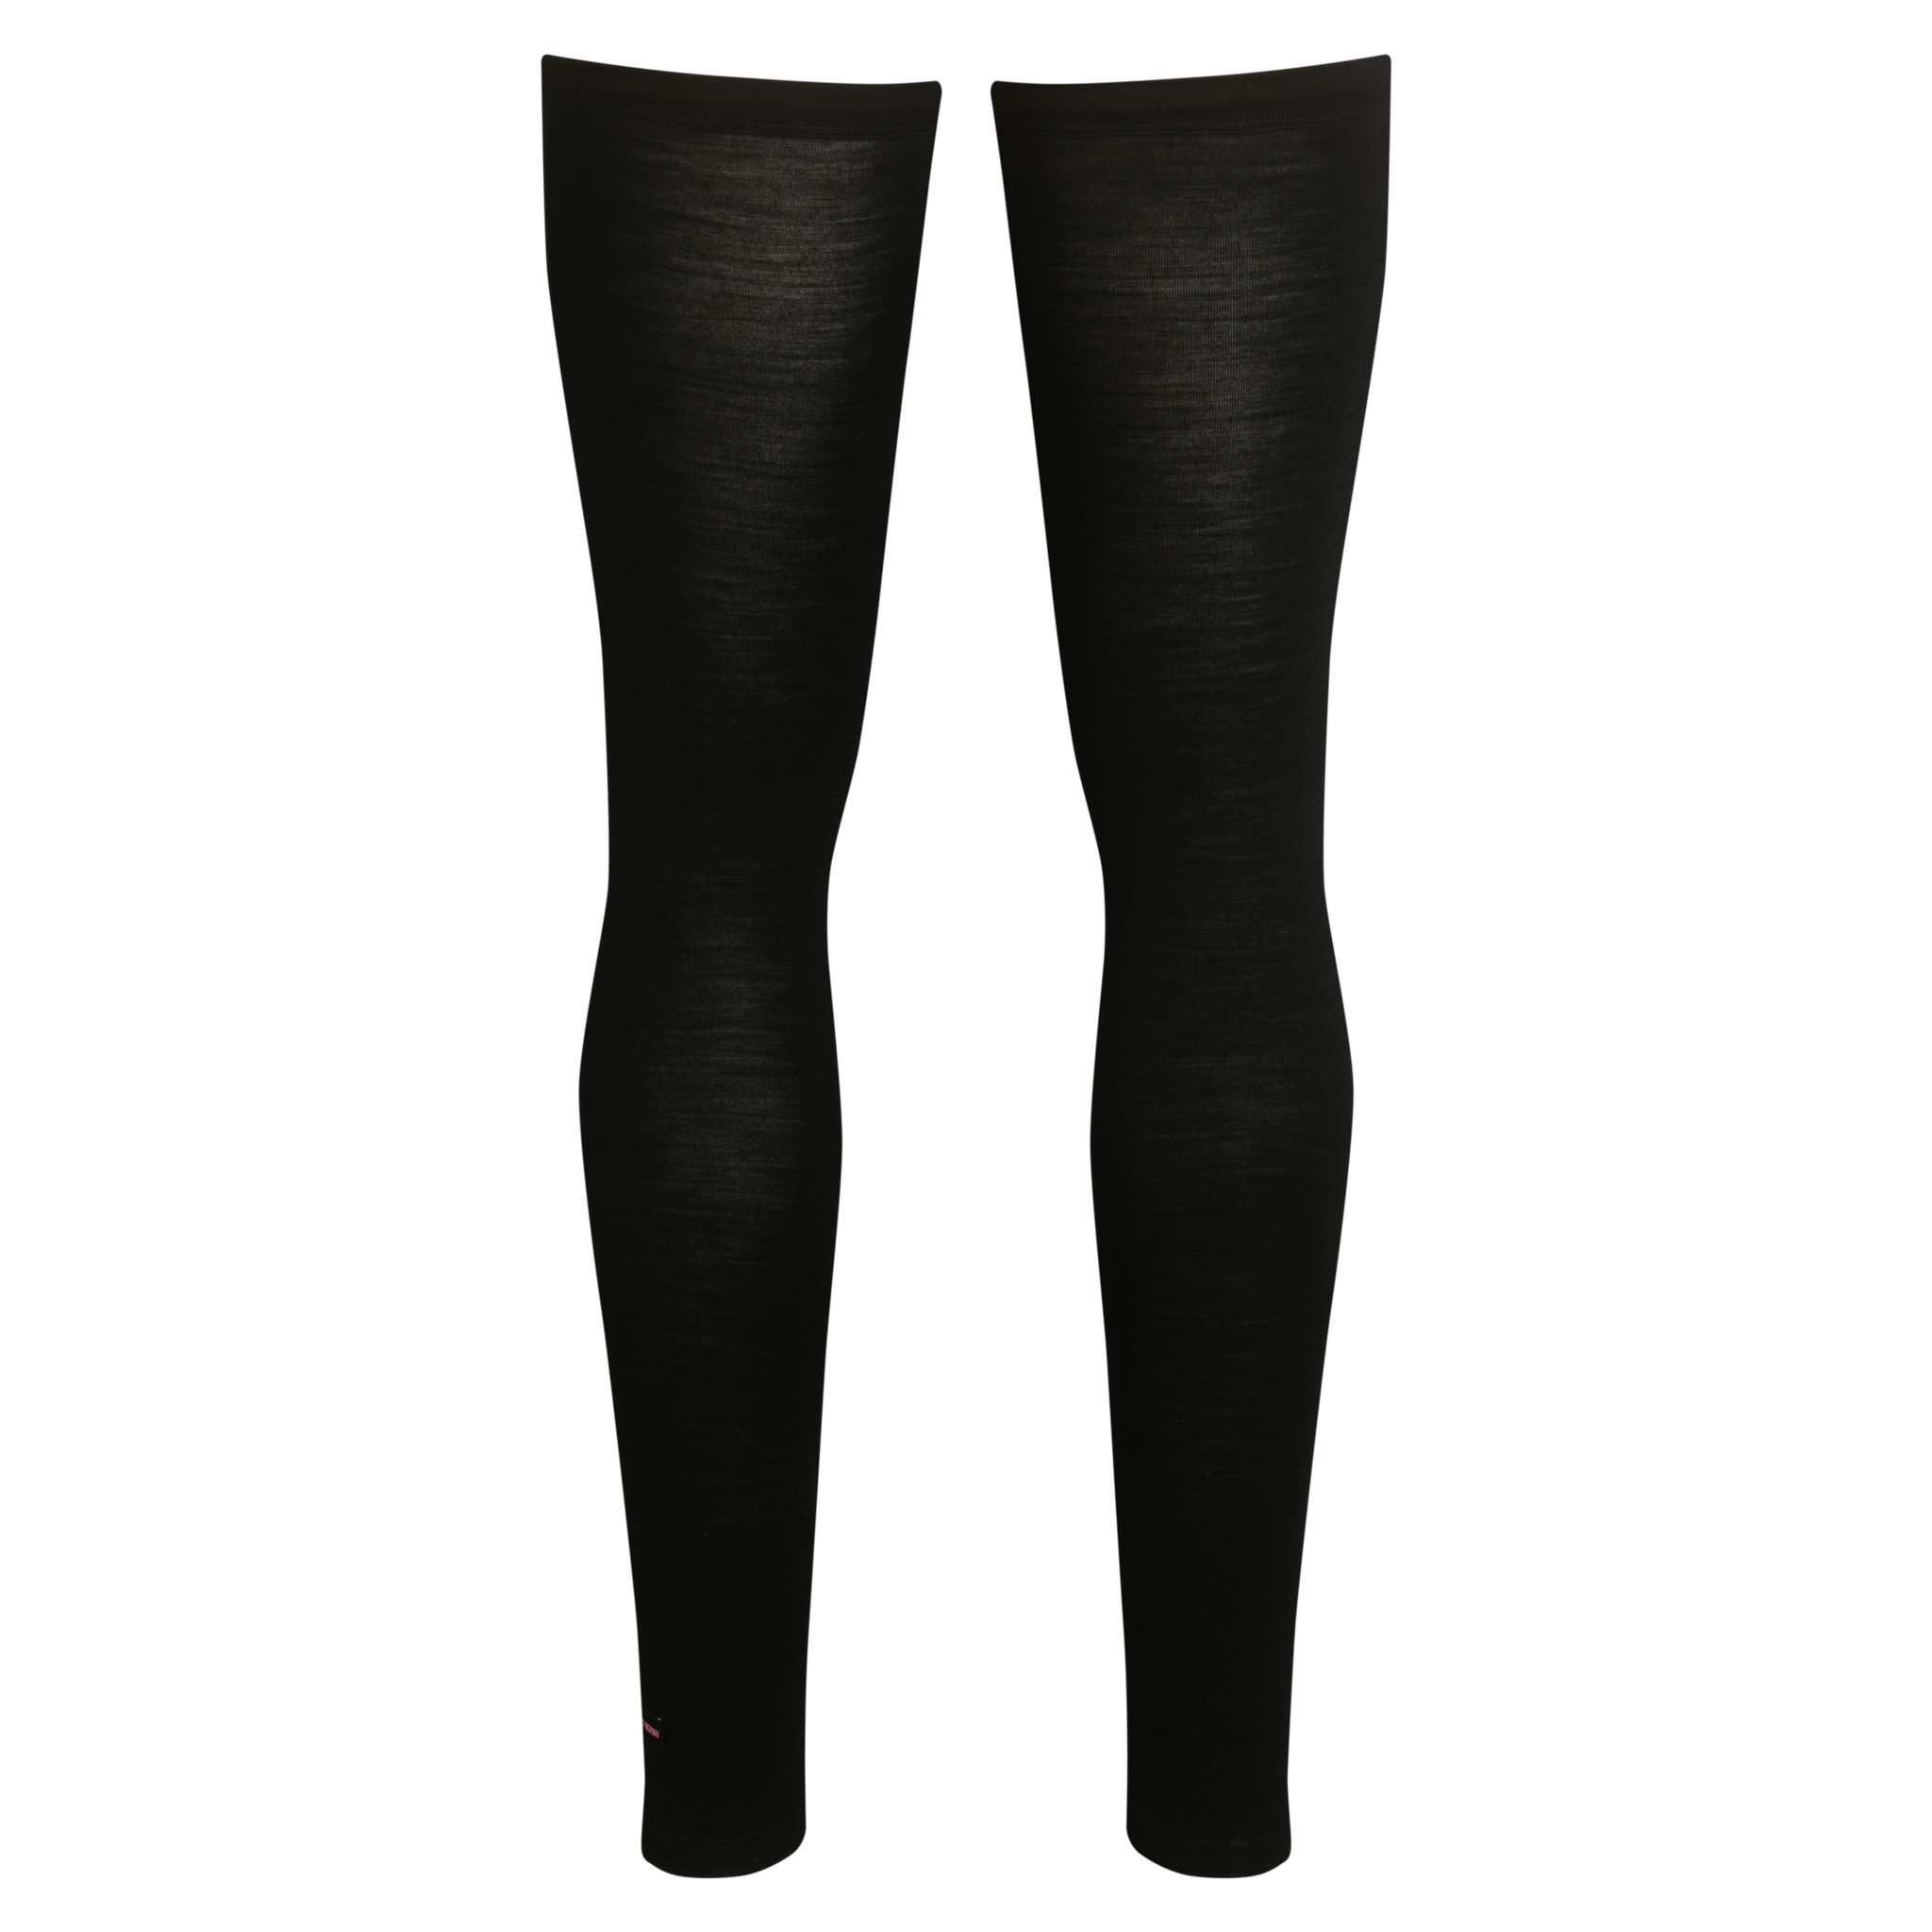 Black & Gray Leg Warmer Leggings are comfortable and stylish